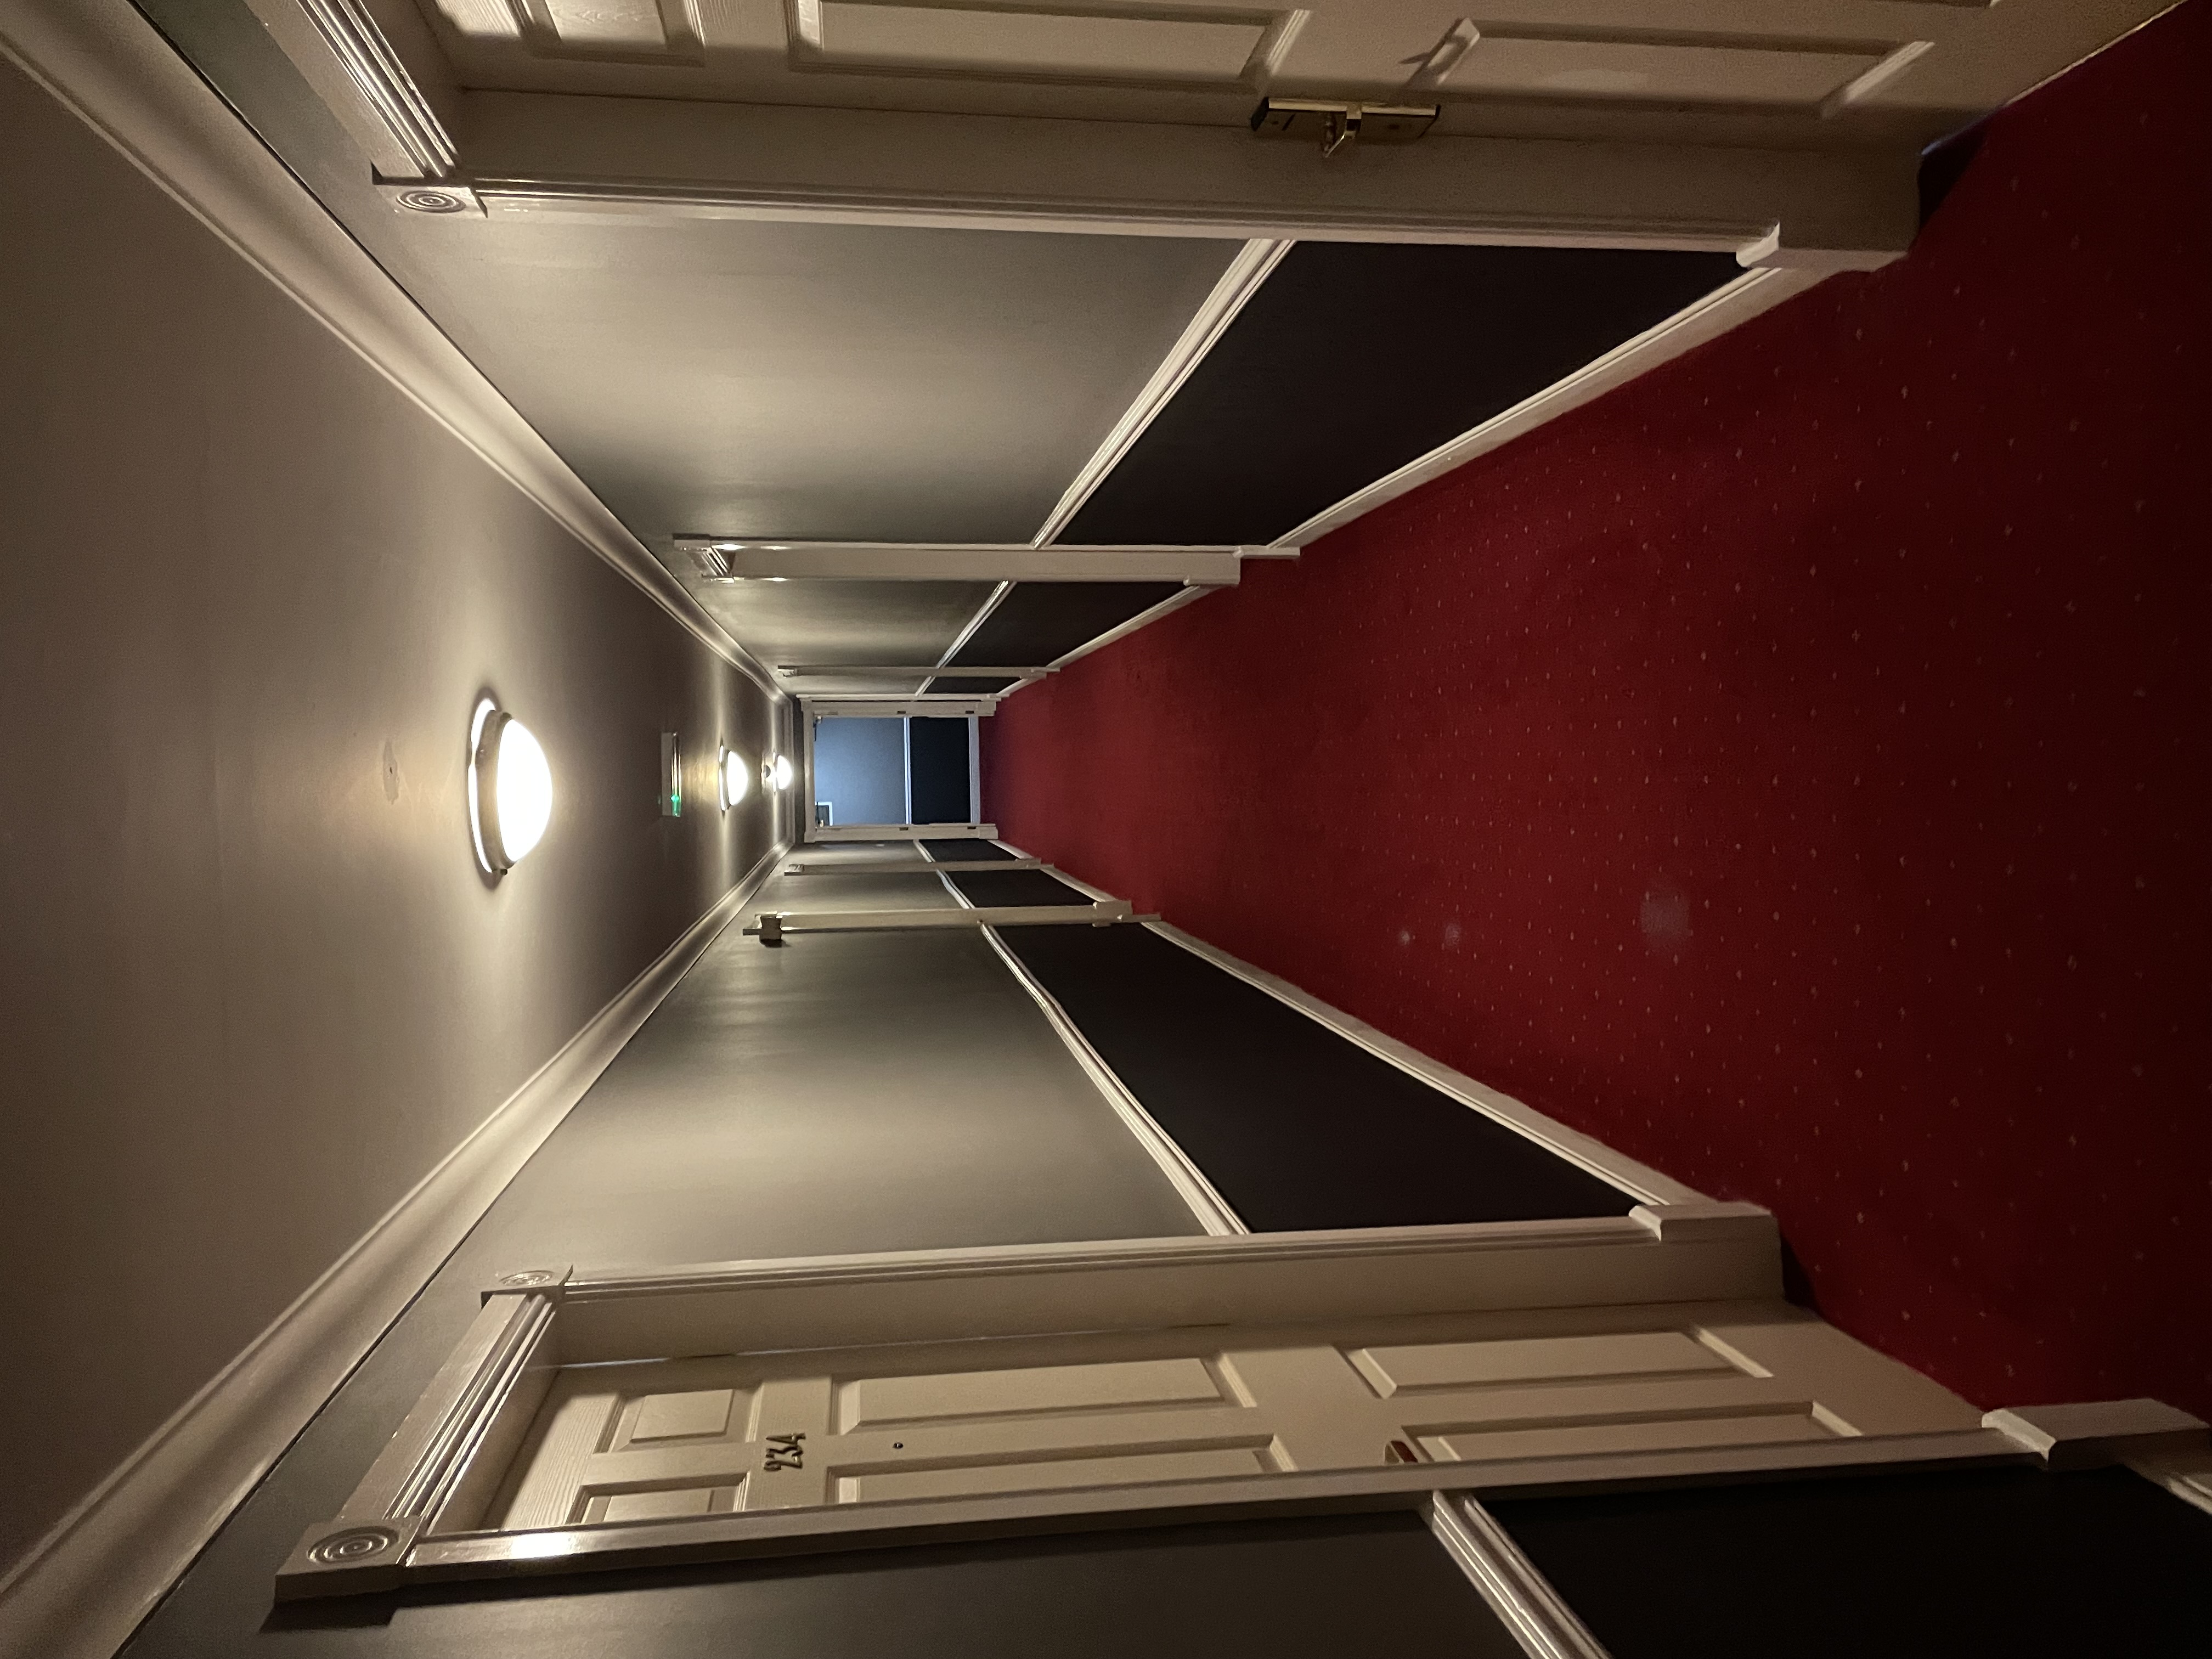 Painted Hotel corridor image